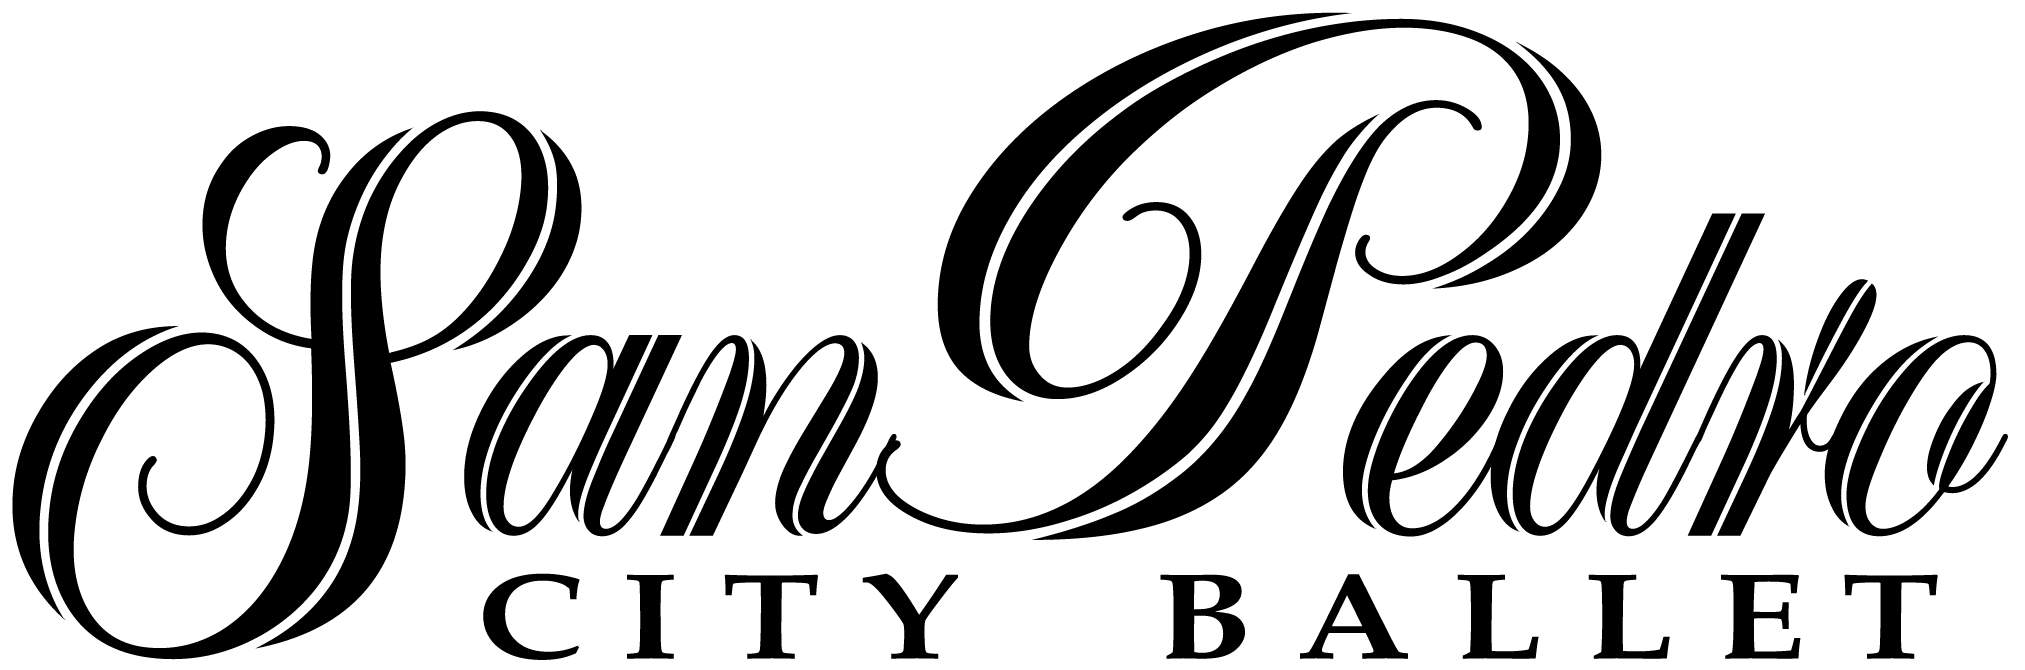 San Pedro City Ballet logo